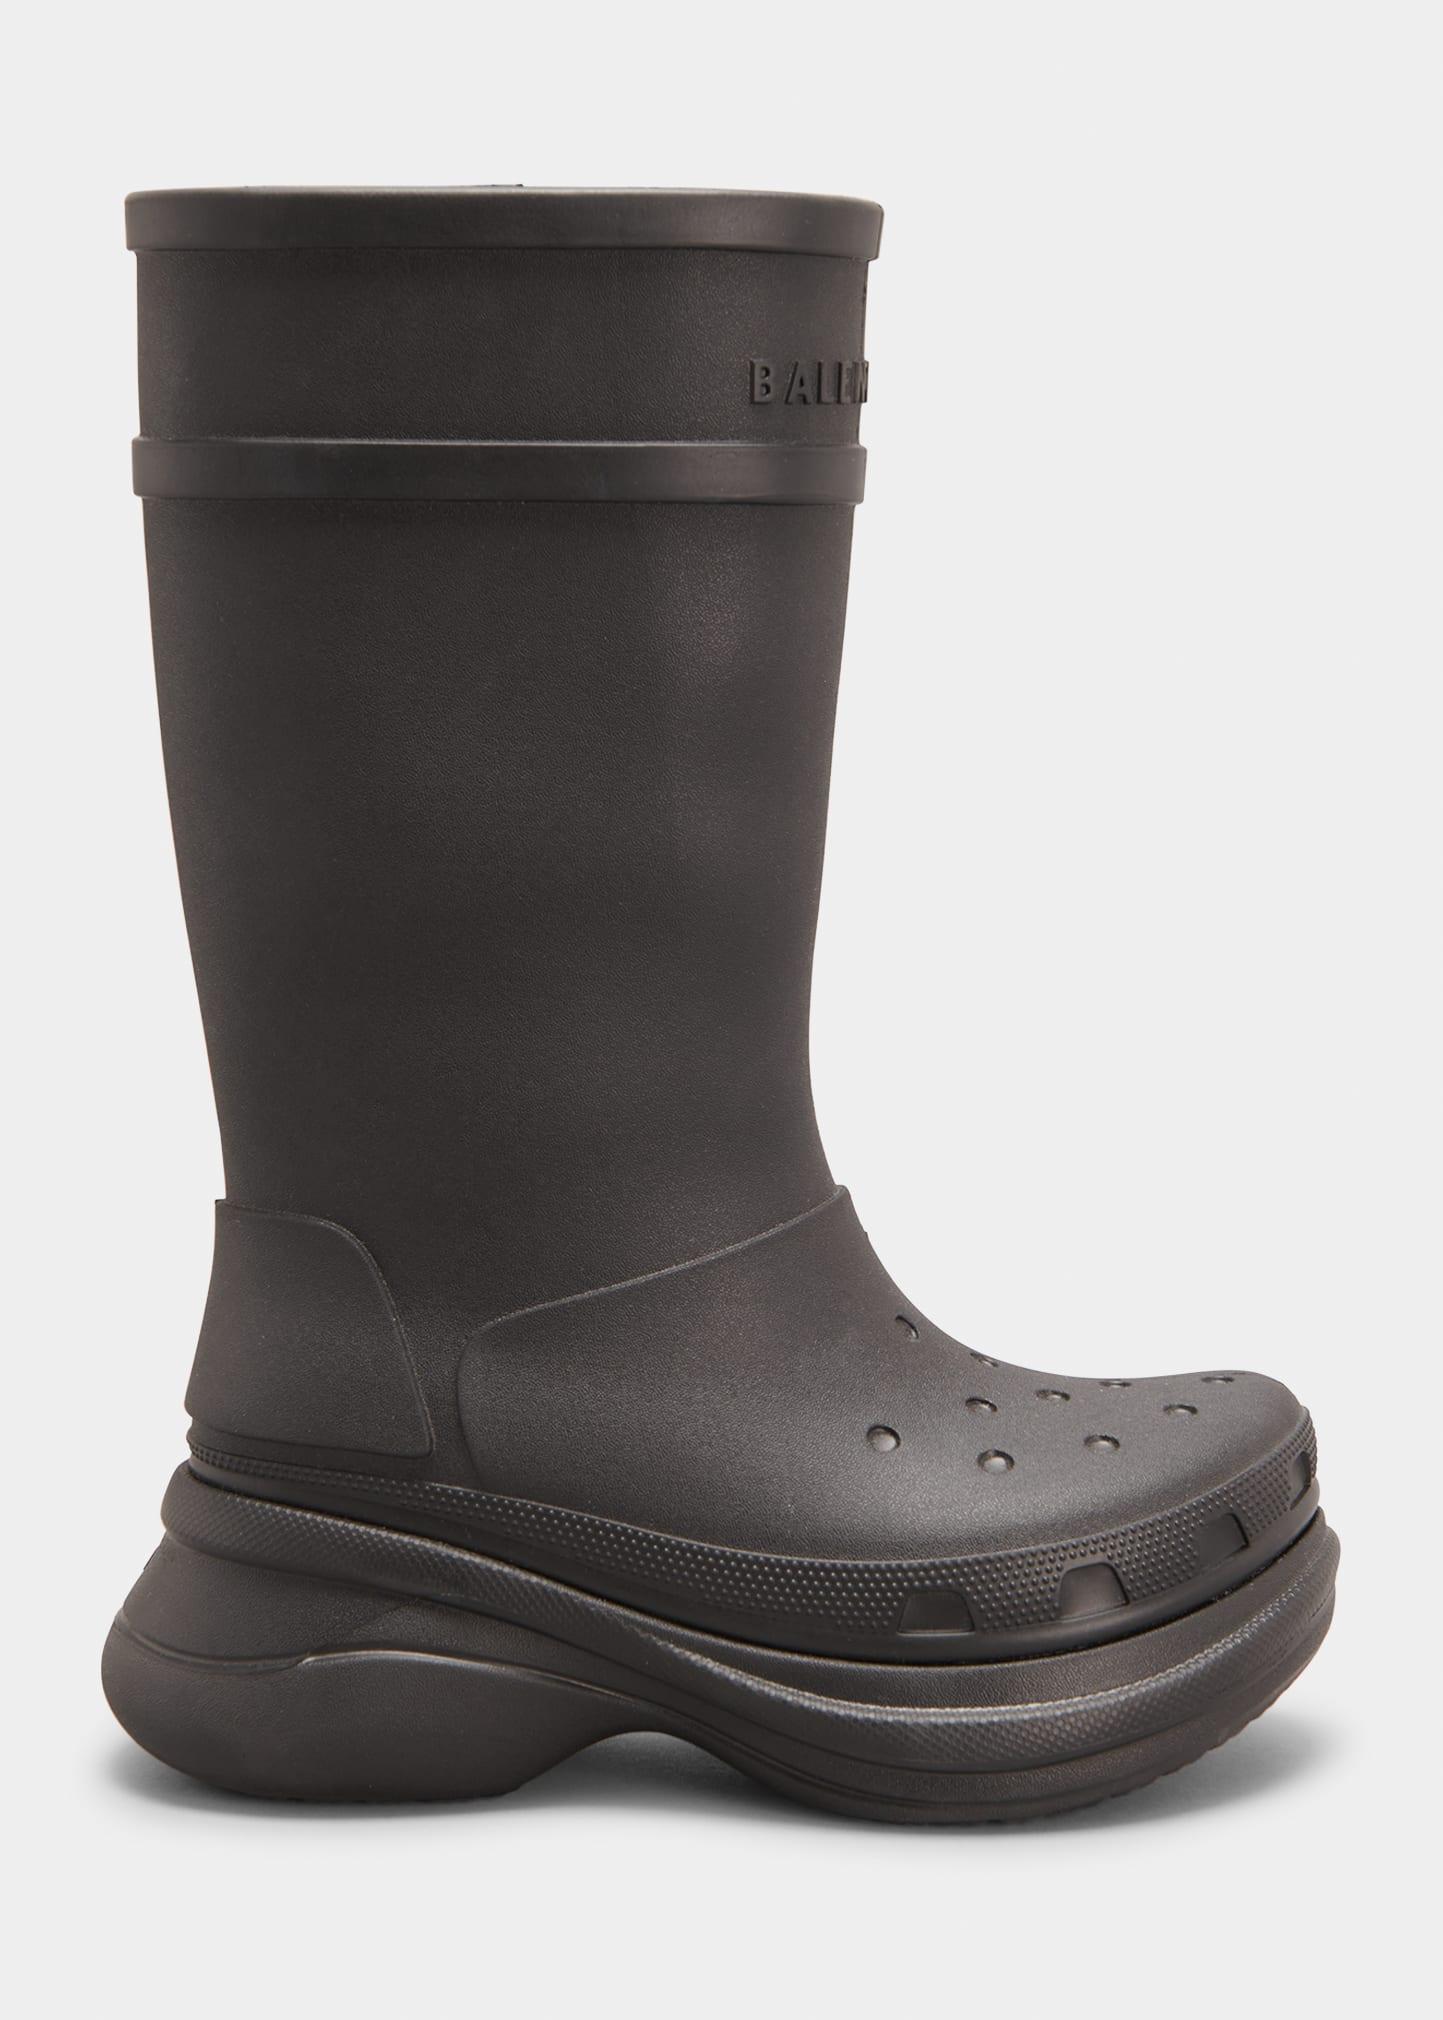 Balenciaga X Croc Rubber Rain Boots in Black | Lyst